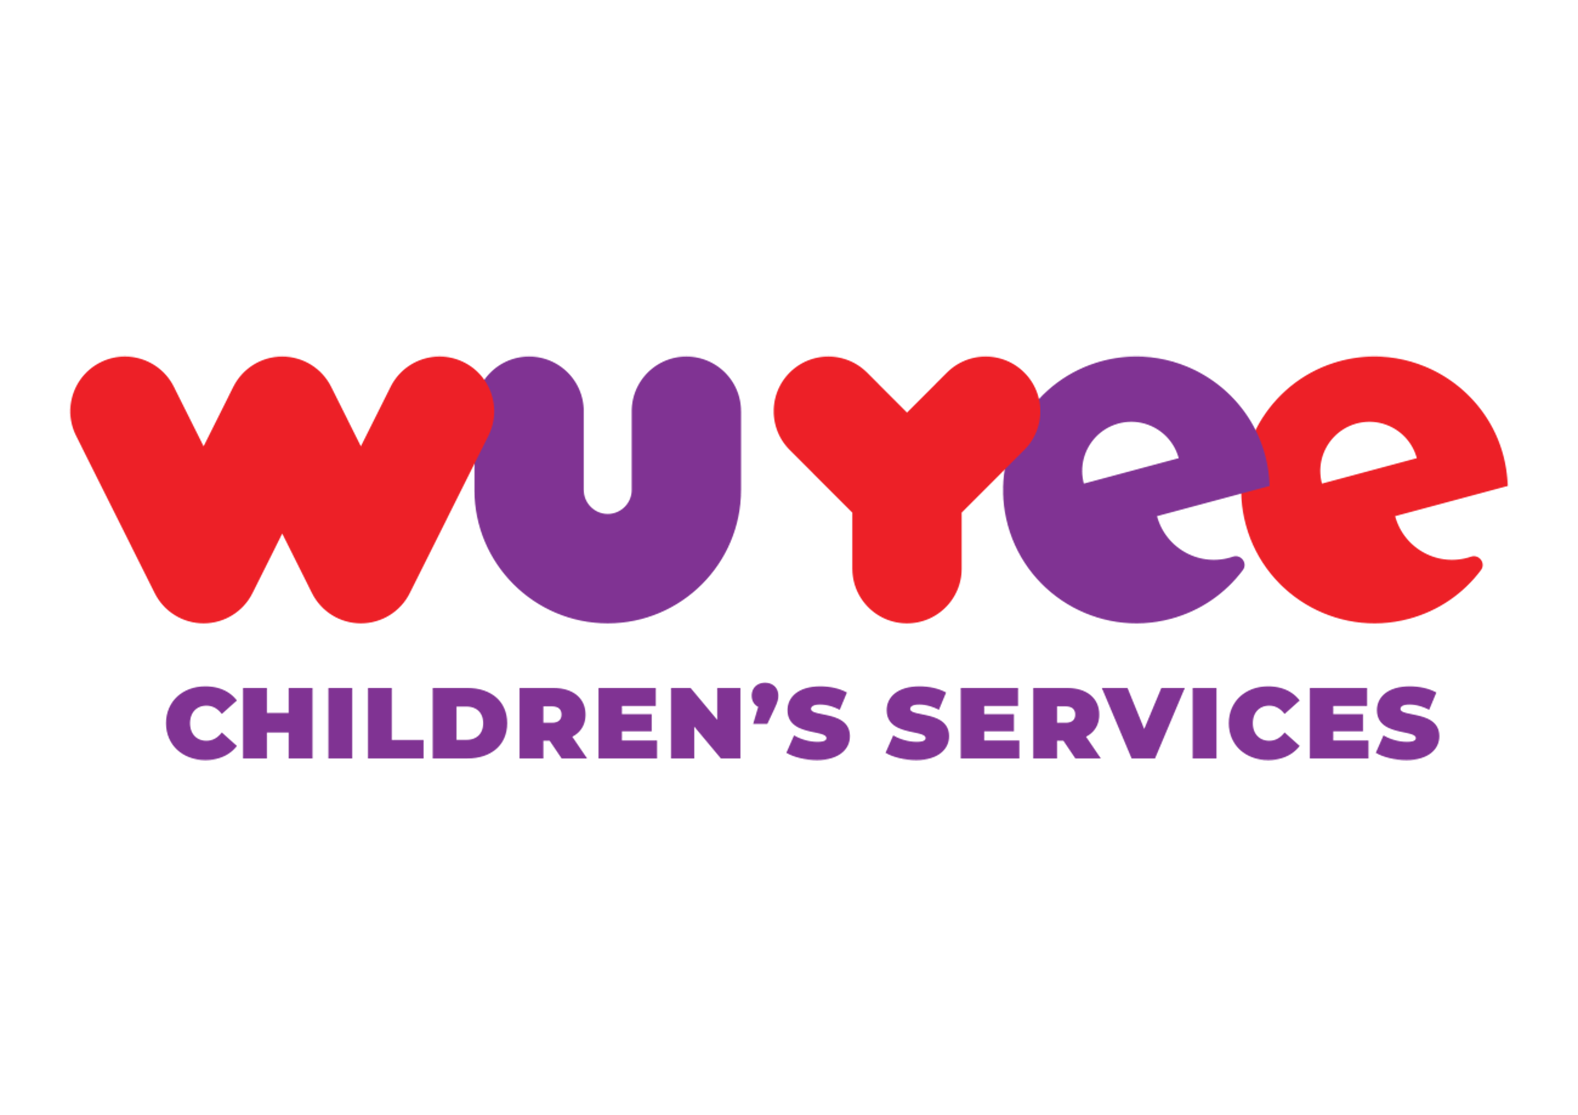 Wu Yee Children's Services